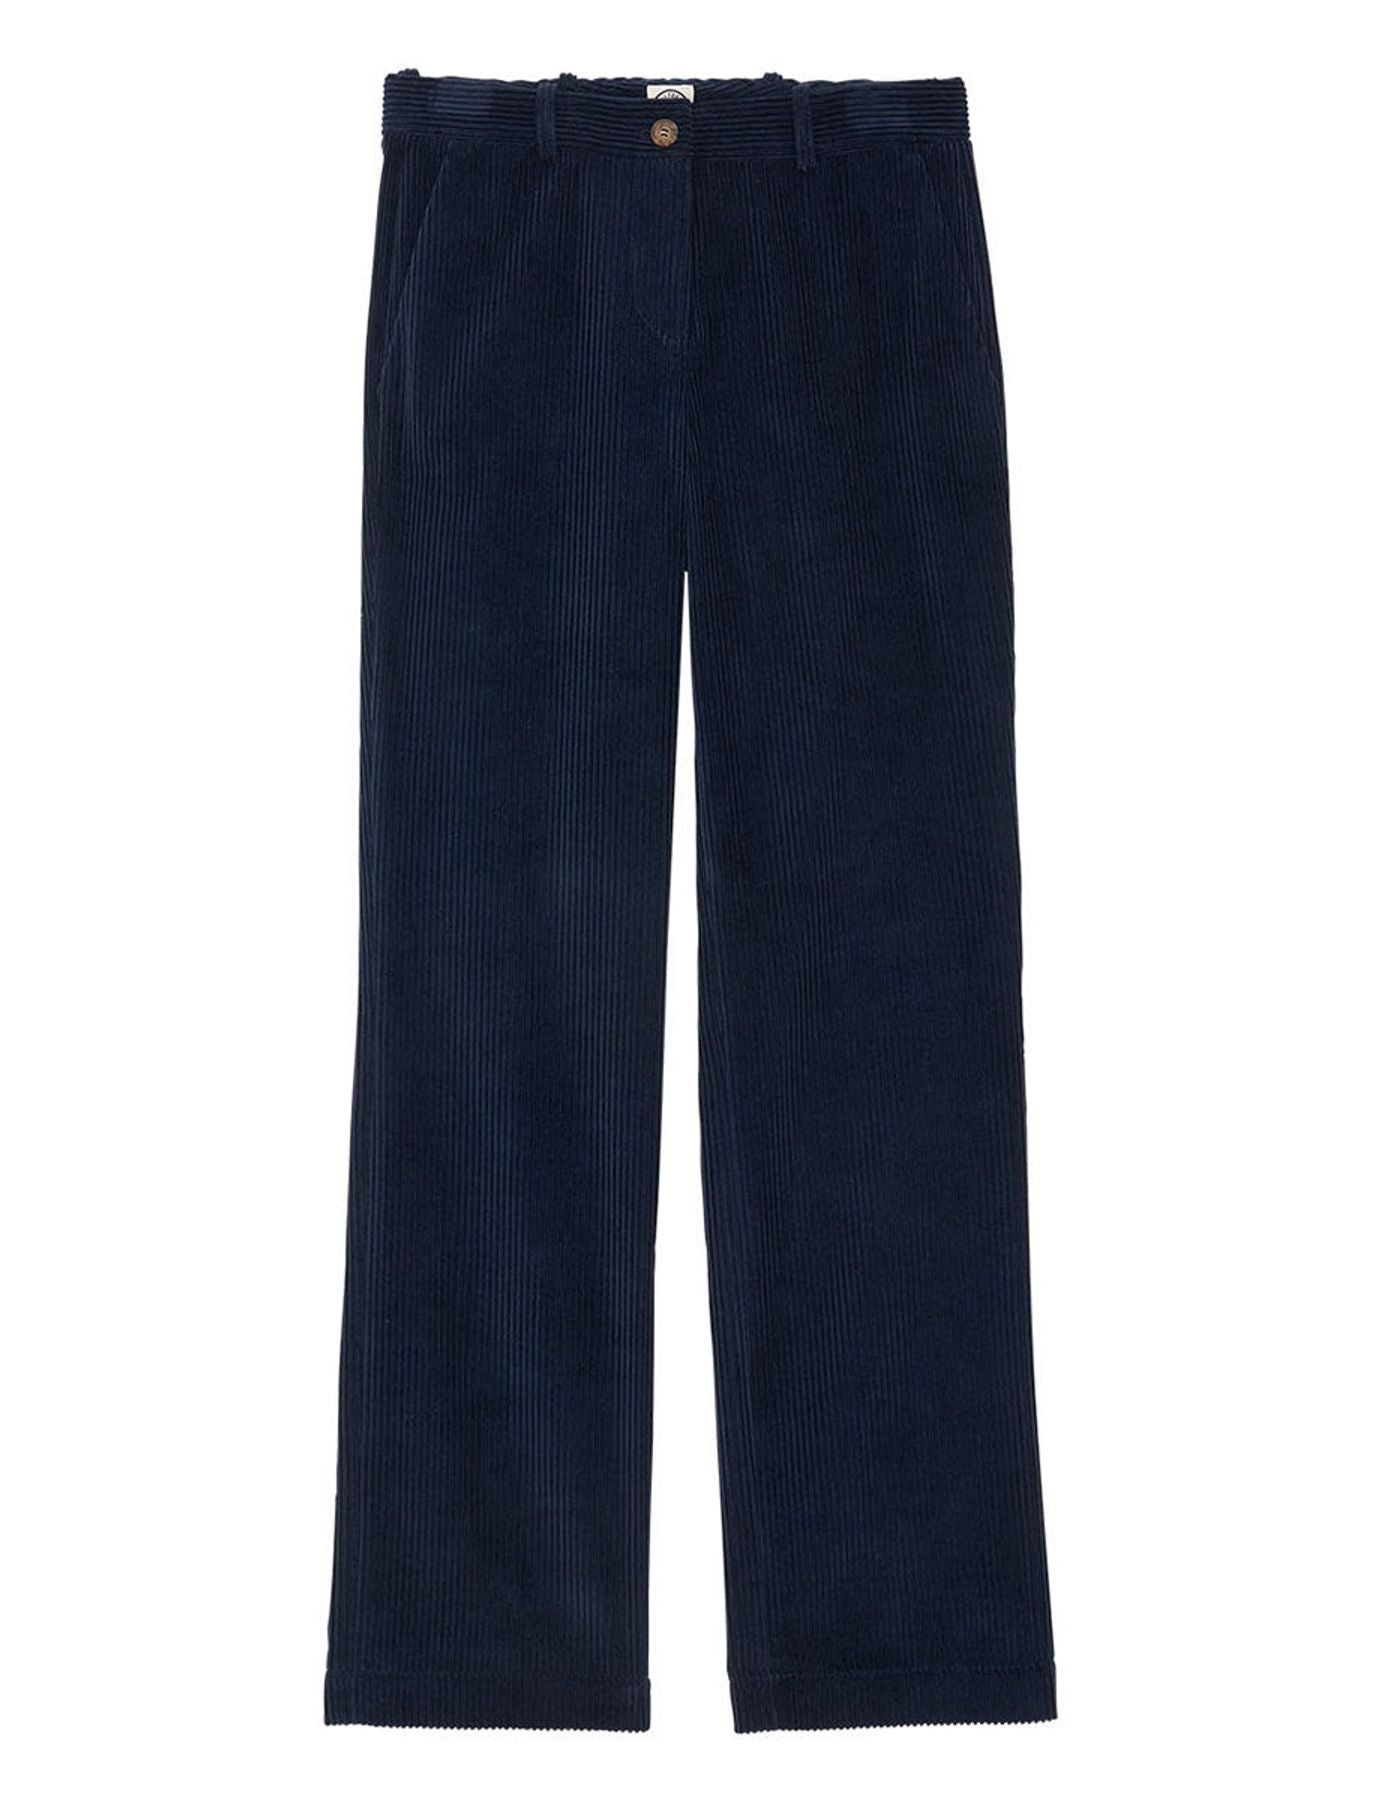 pantaloni-francisco-blu-navy-cotone